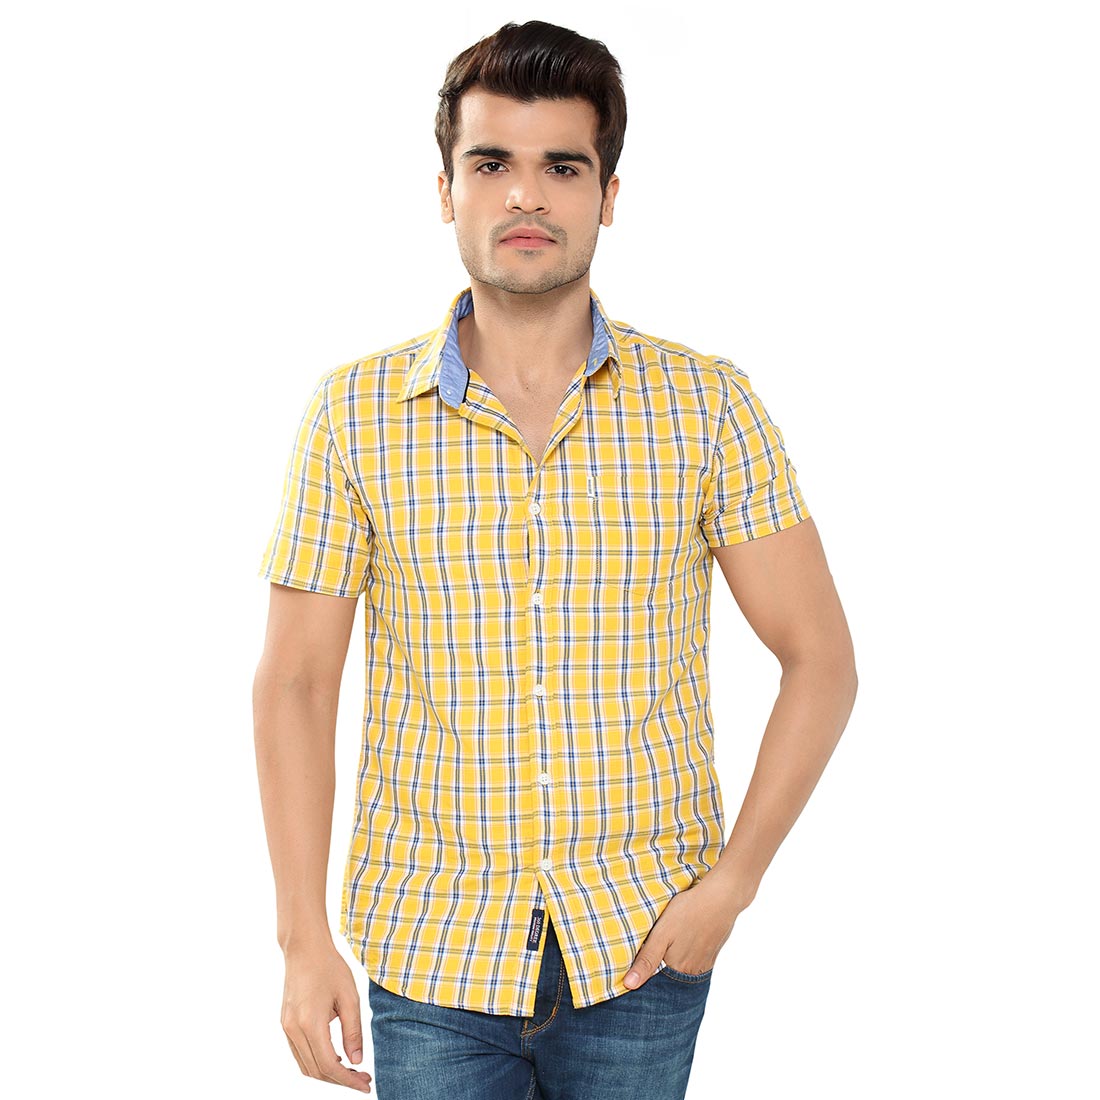 Buy 360 Degree Men's Shirt Online @ ₹840 from ShopClues